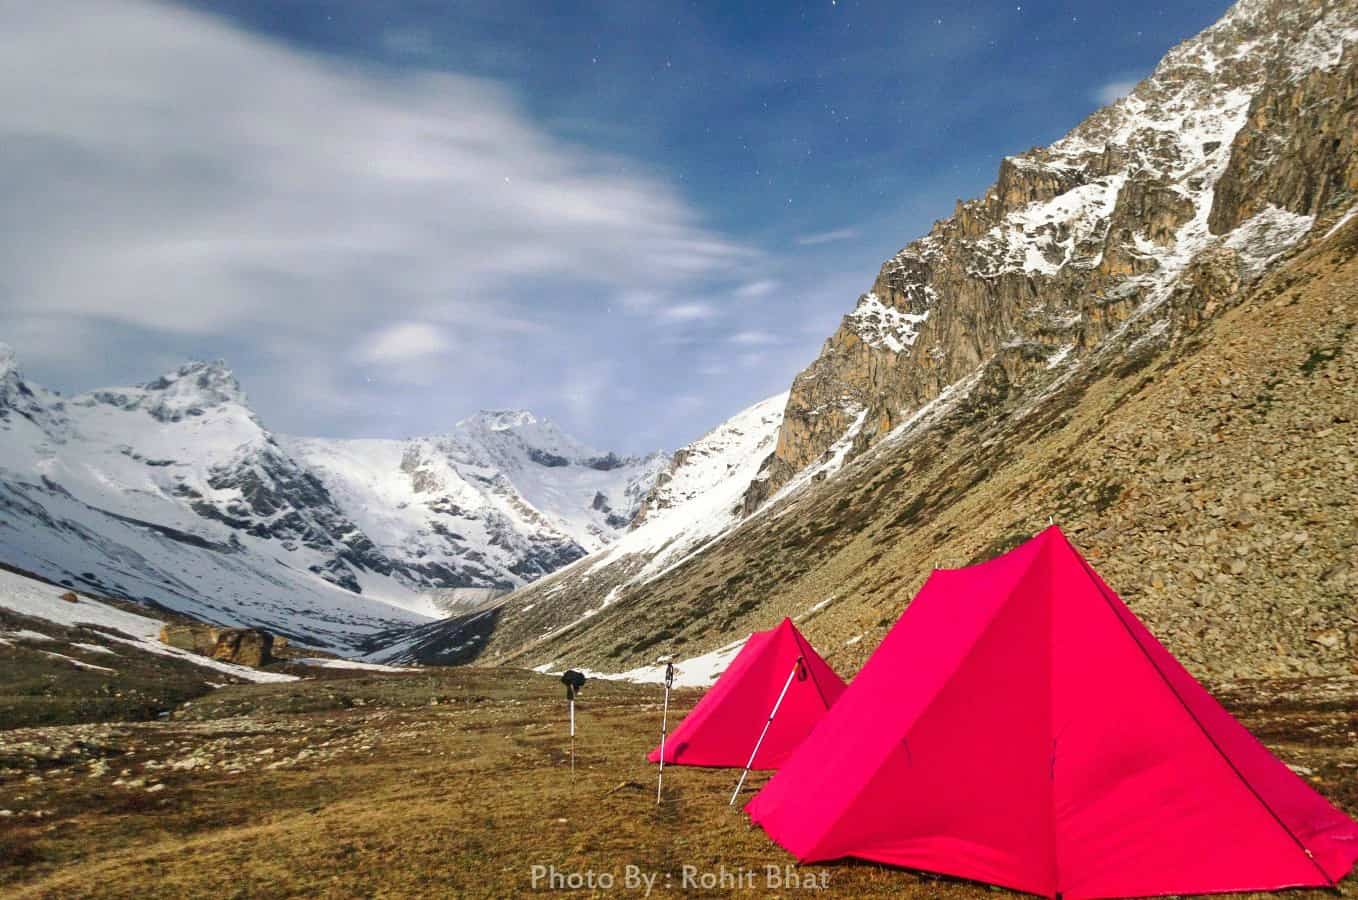 This has to be best alpine tents (though bit heavy) on high altitudes. [Lamkhaga pass trek]